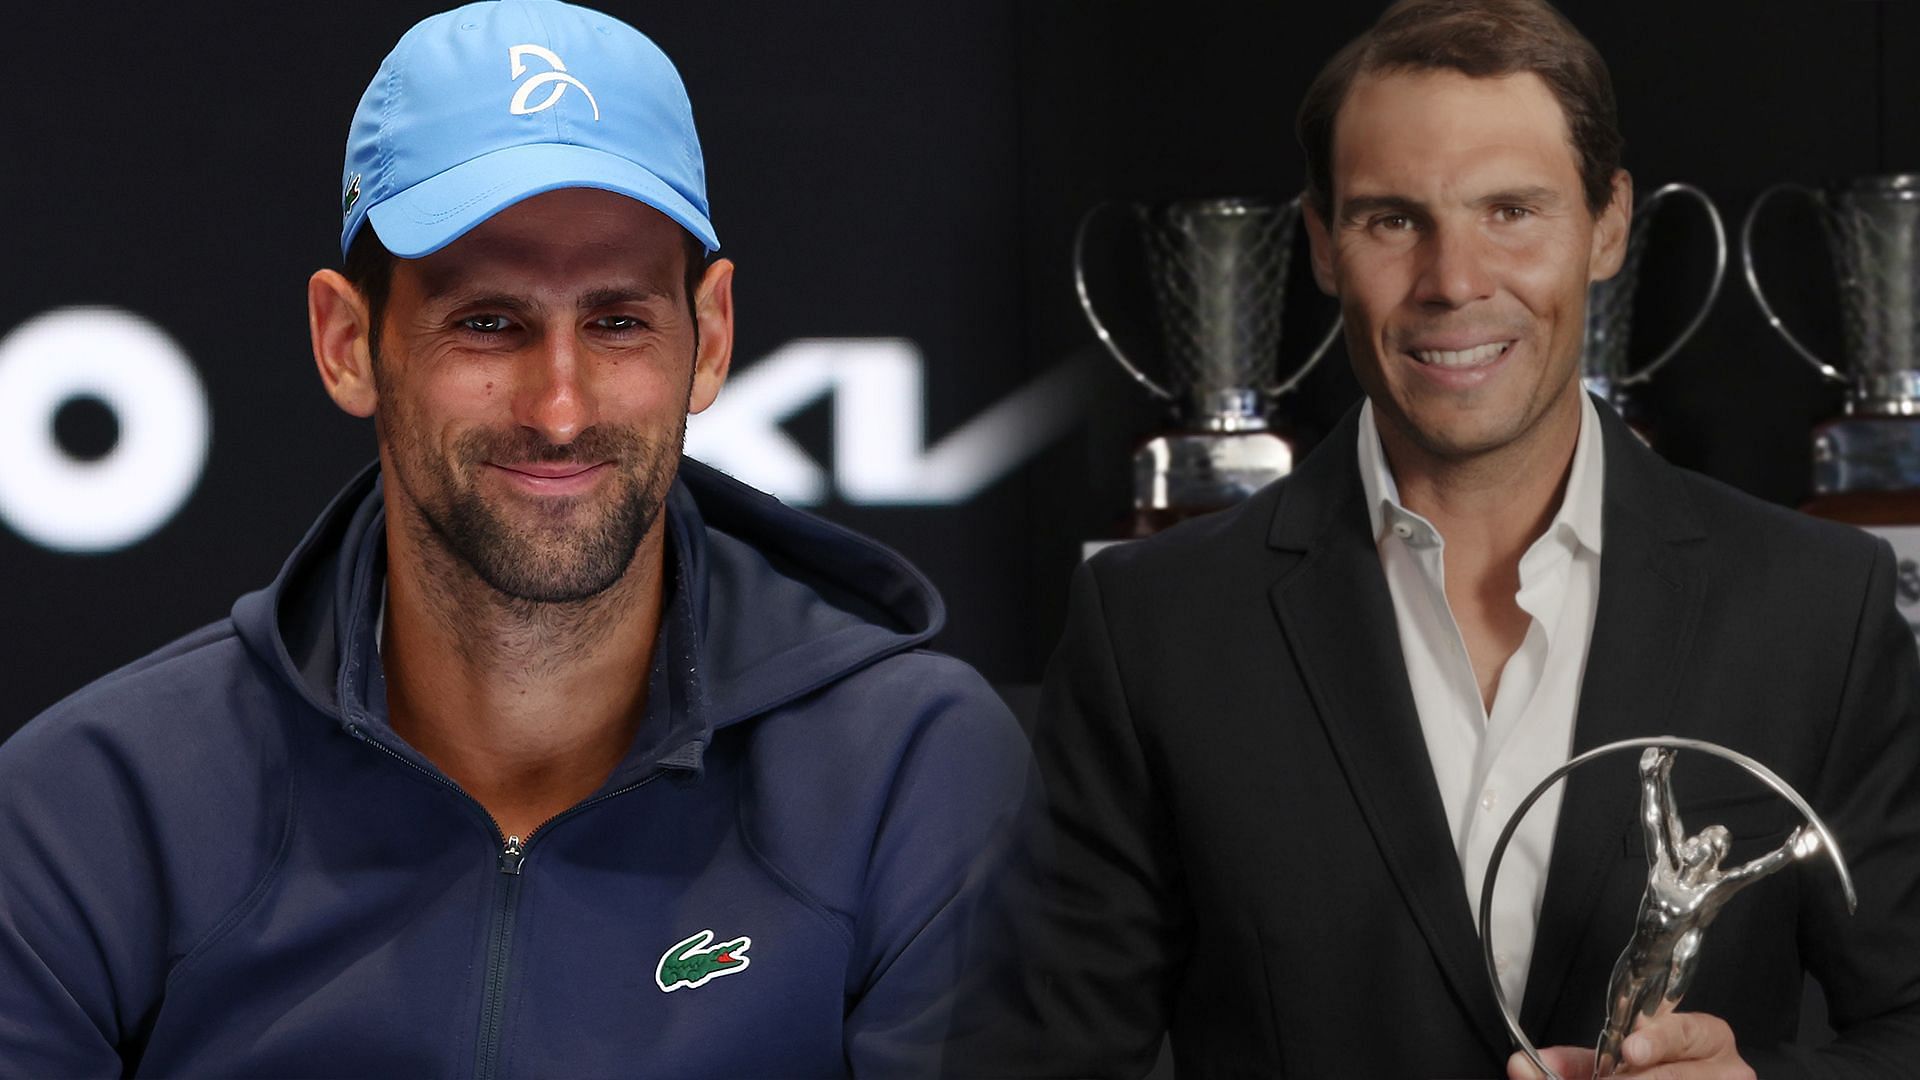 Novak Djokovic looking forward to equaling Rafael Nadal in the Slam race at the 2023 Australian Open